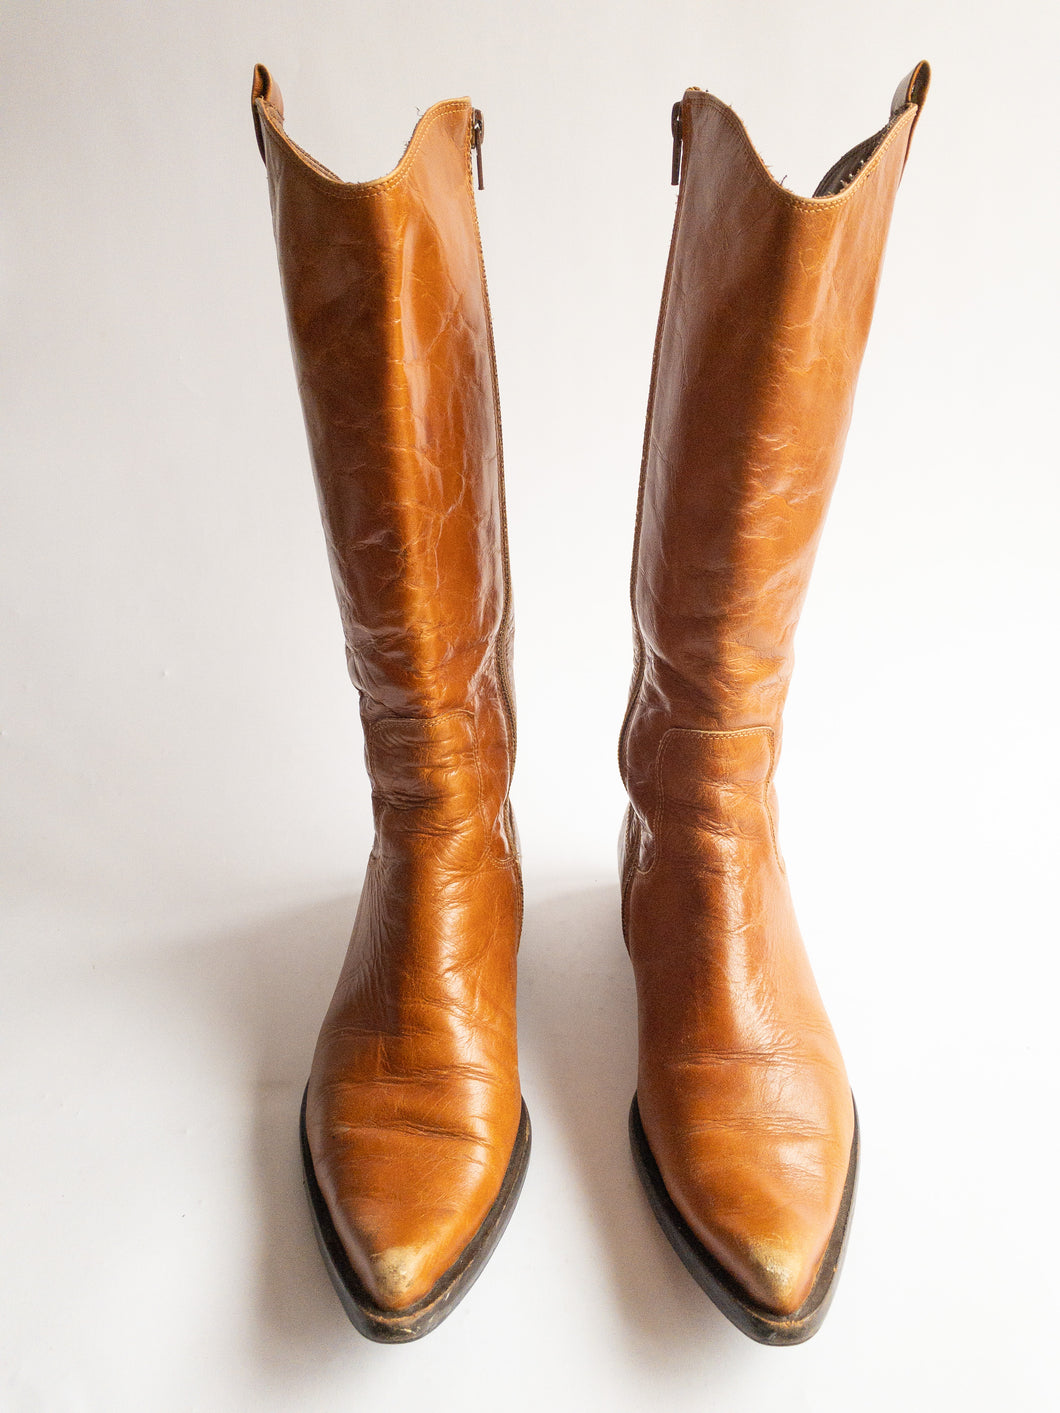 Renzo Rainero Italian leather boots